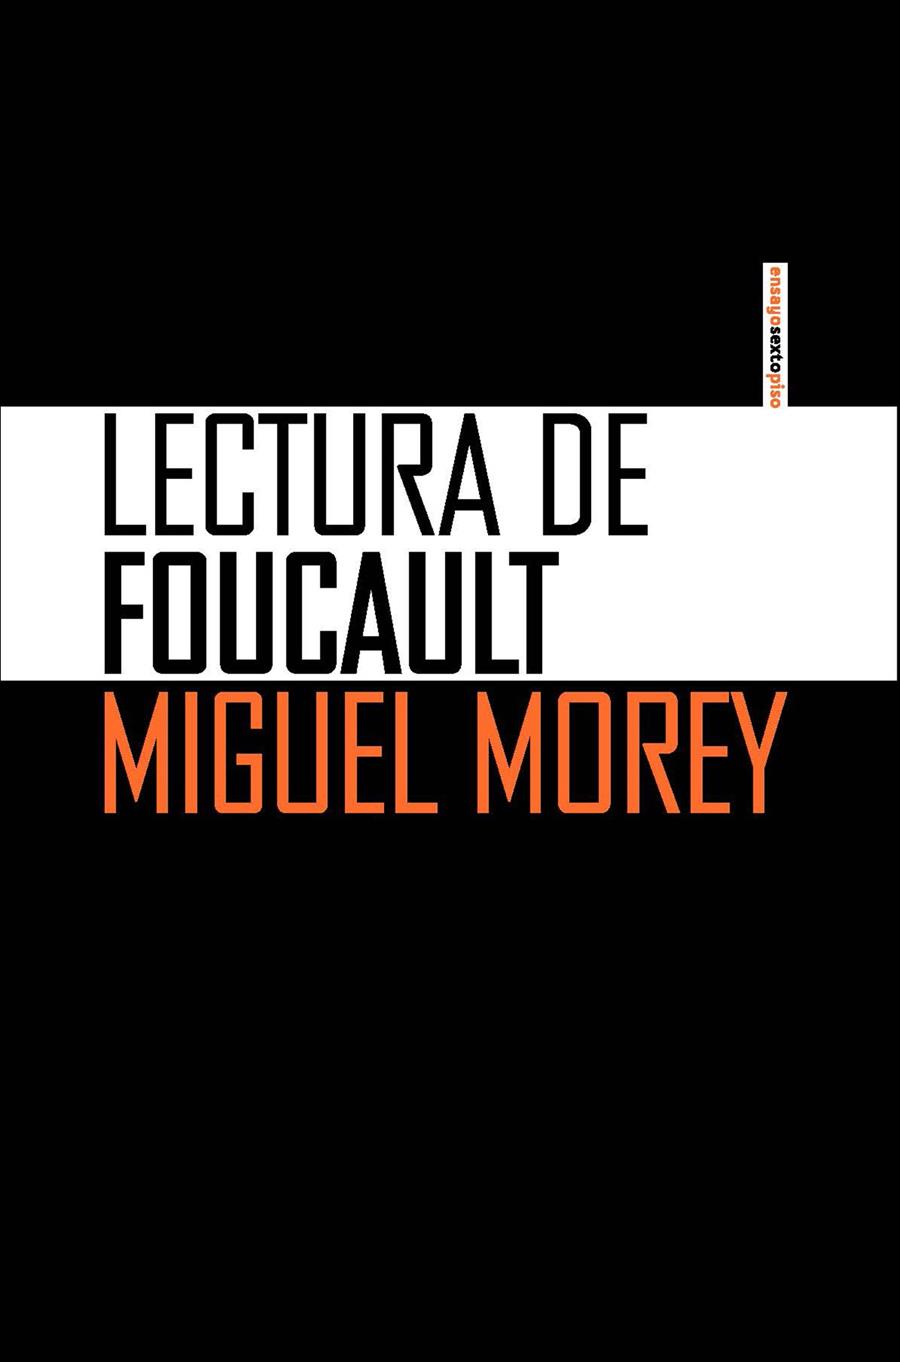 Lectura de Foucault | Miguel Morey